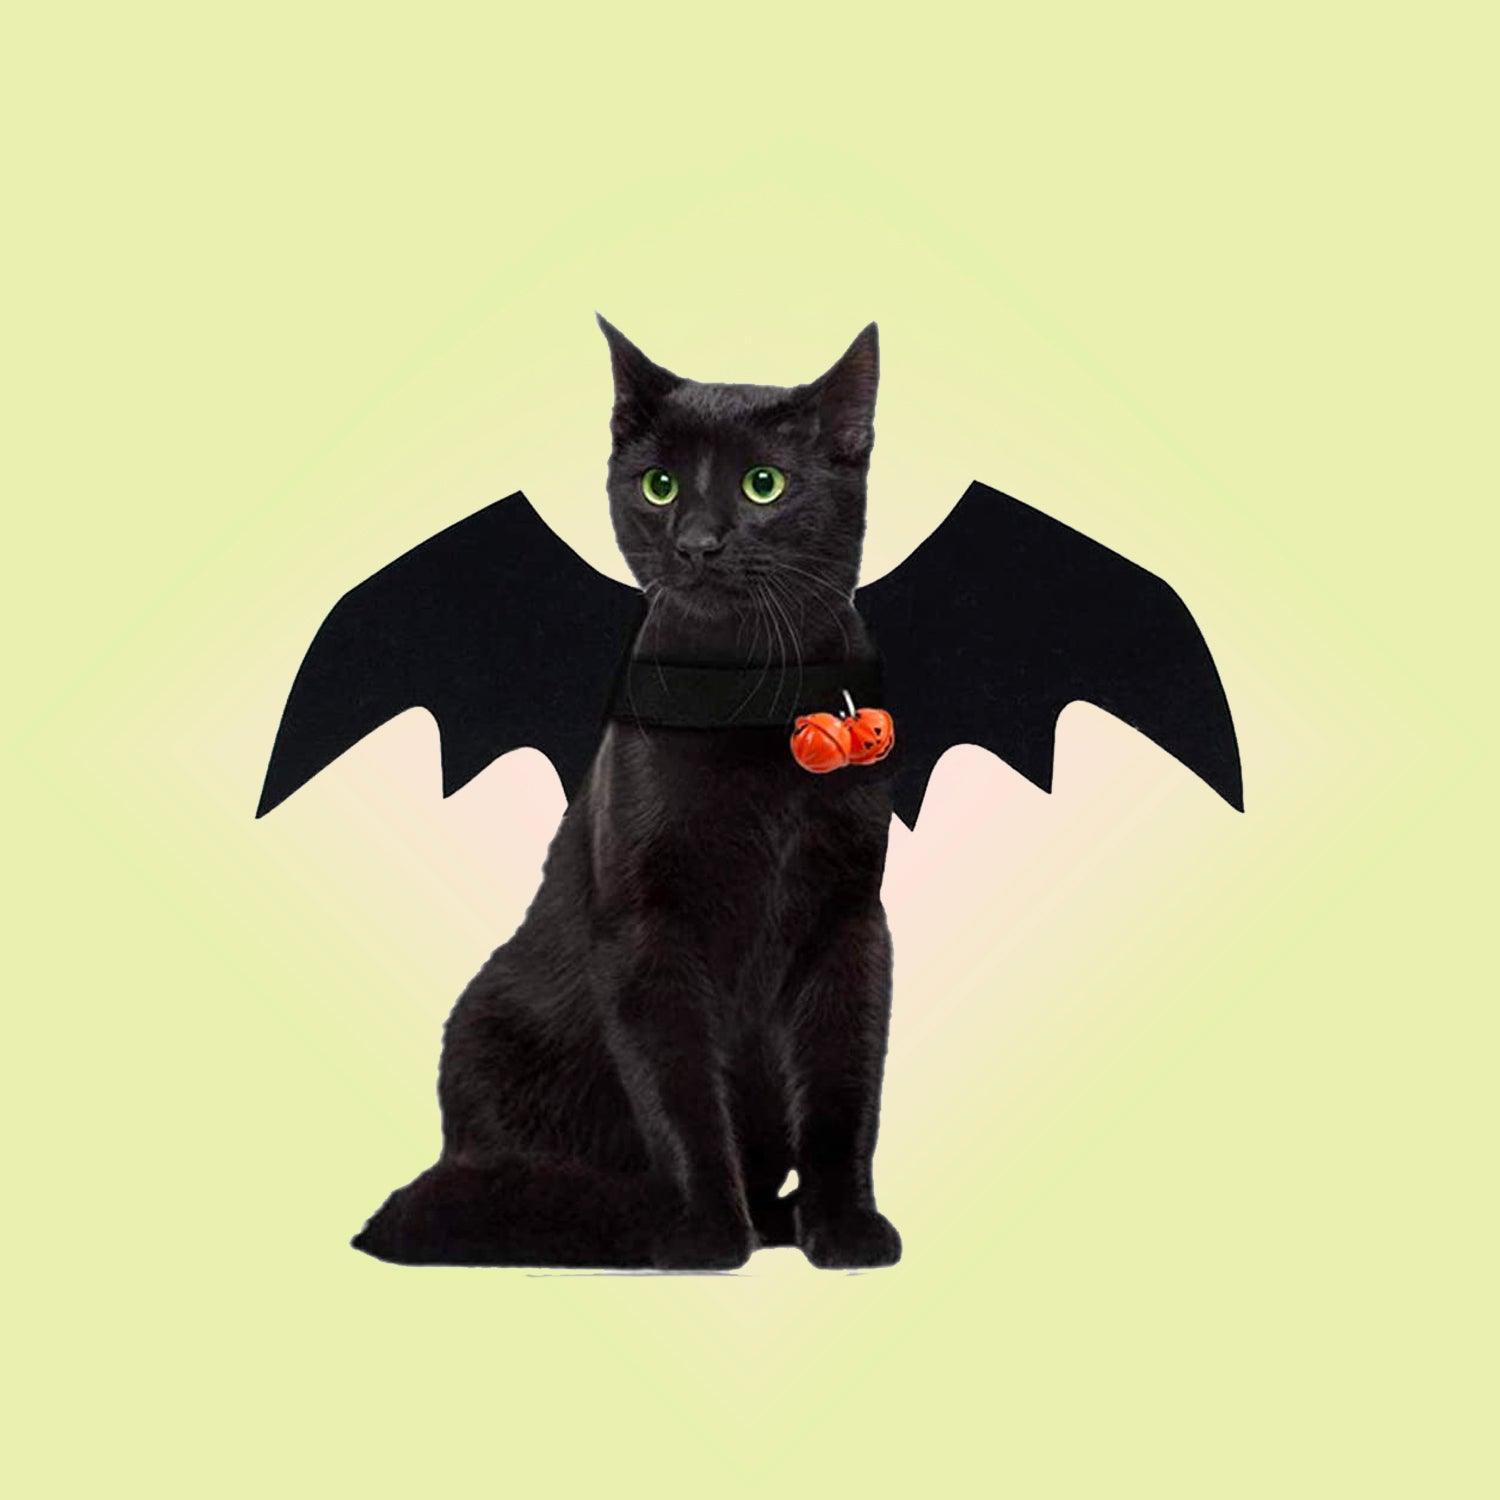 Black Cat Halloween Costume, 2-3T